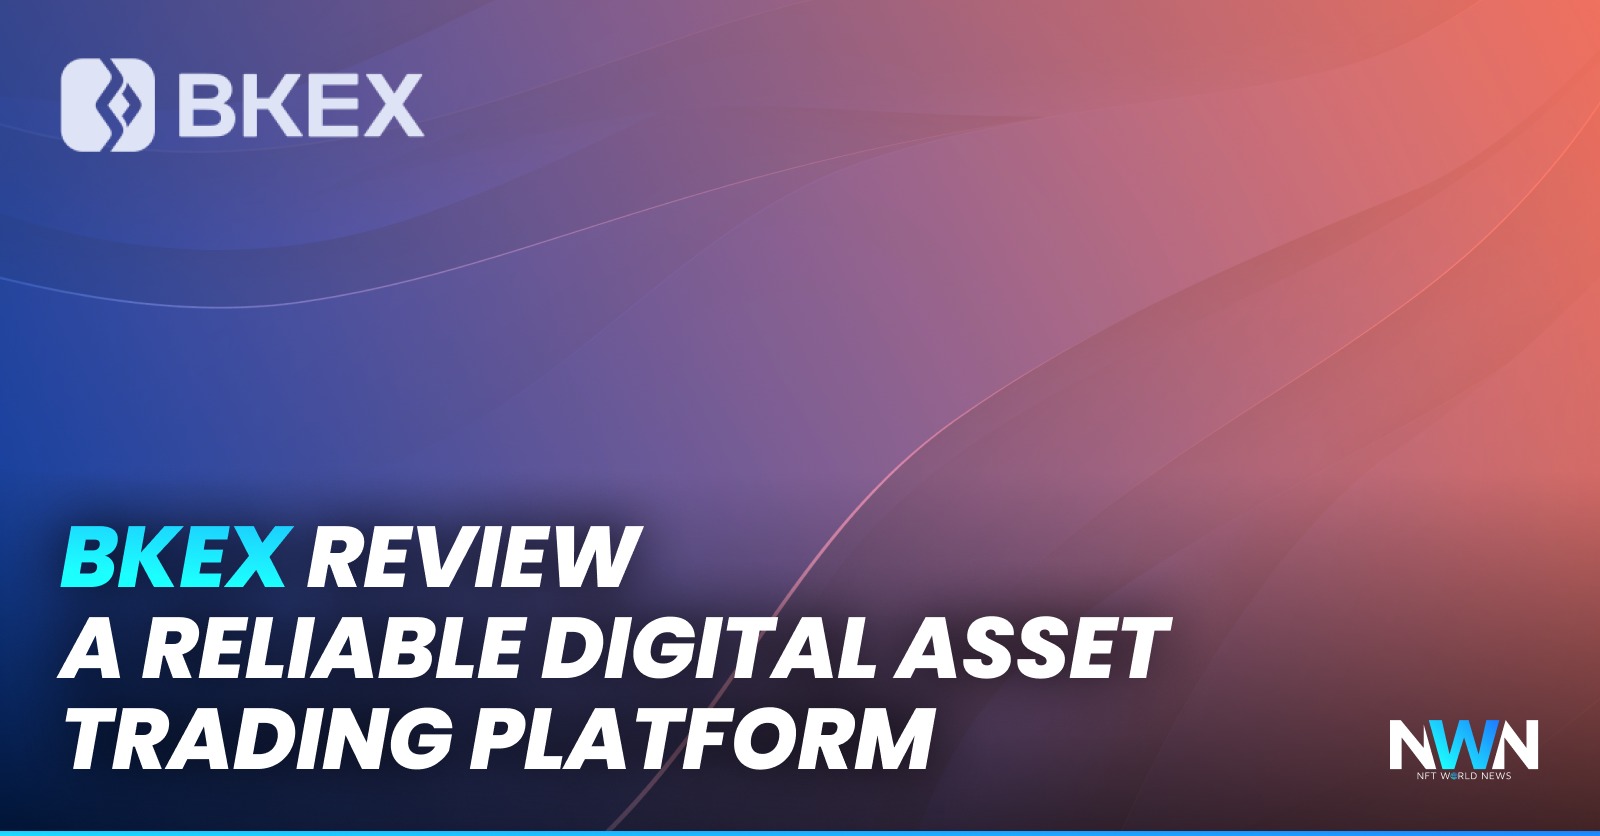 BKEX Review: A Reliable Digital Asset Trading Platform